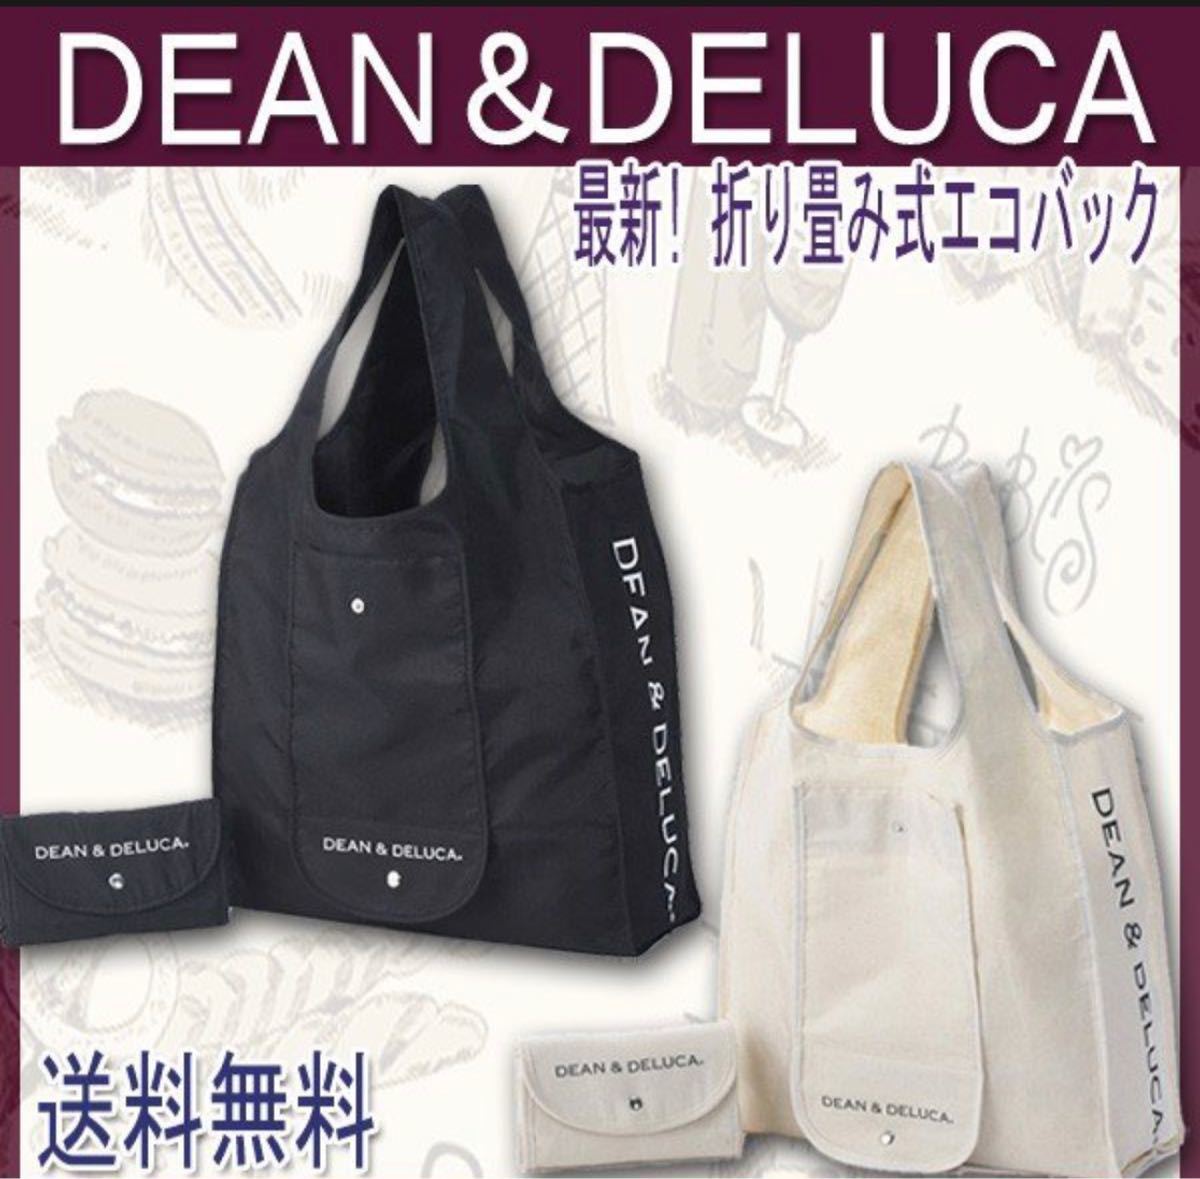 DEAN&DELUCA 折り畳み ショッピングバッグ /エコバックホワイト